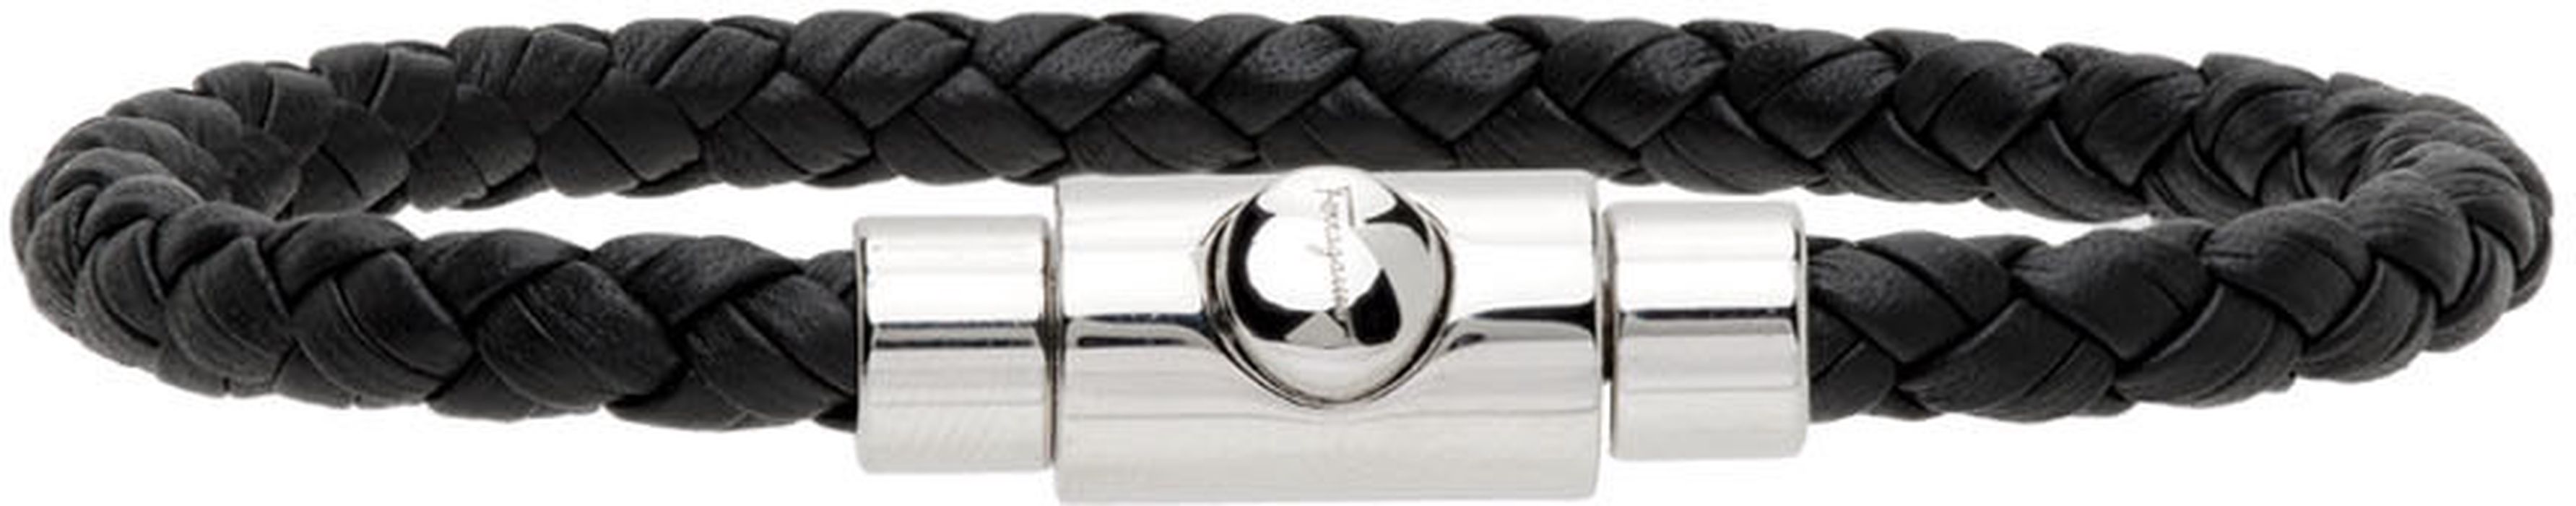 Salvatore Ferragamo Black Braided Leather Bracelet